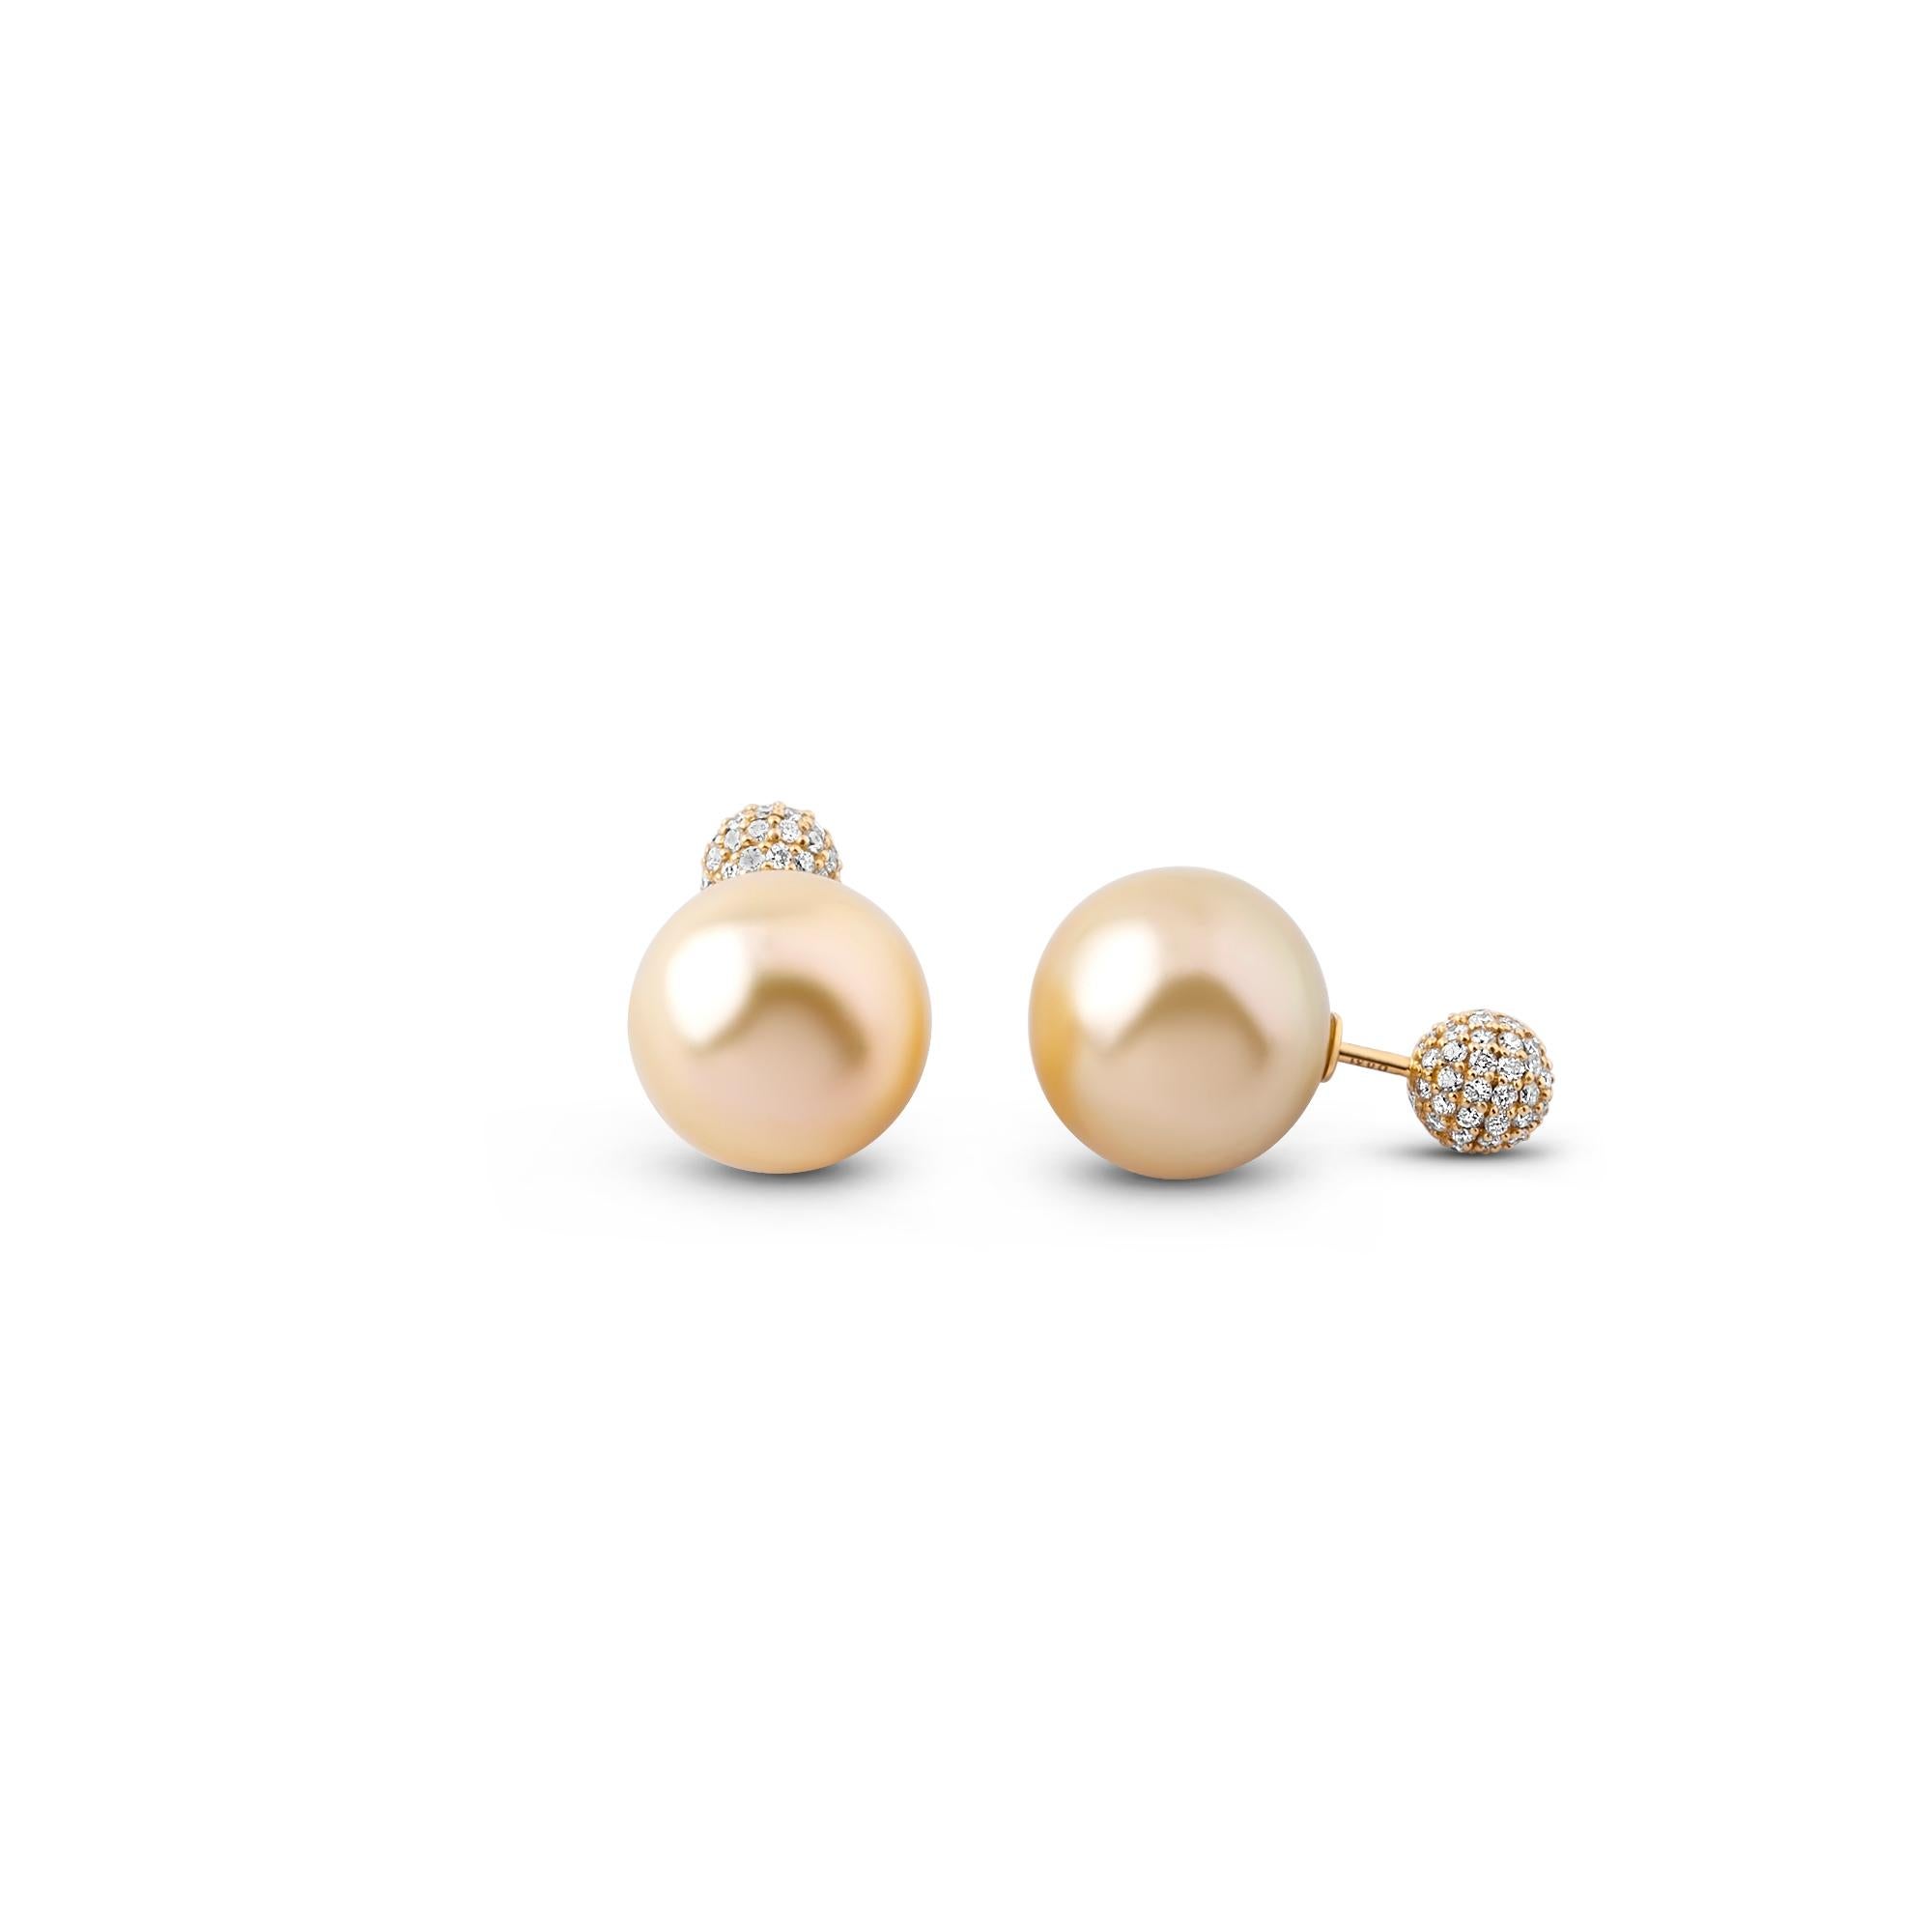 dior ball earrings